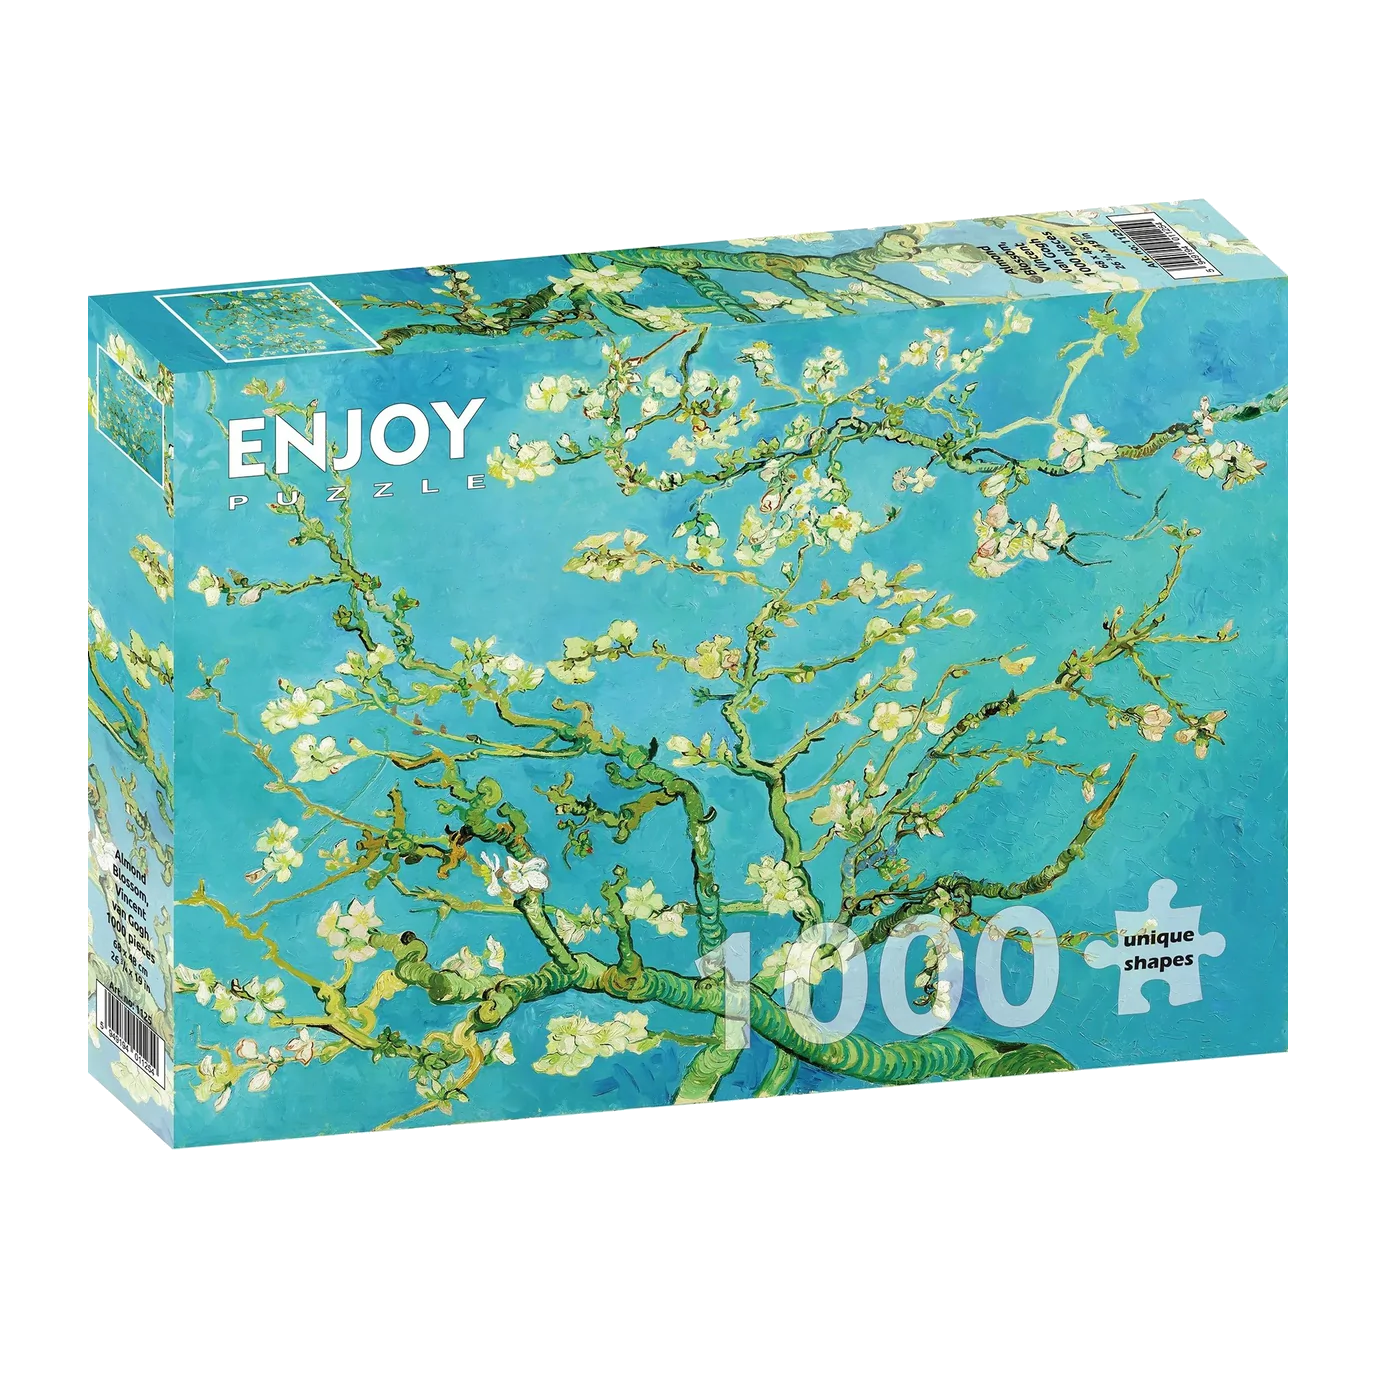 Van Gogh: Almond Blossom